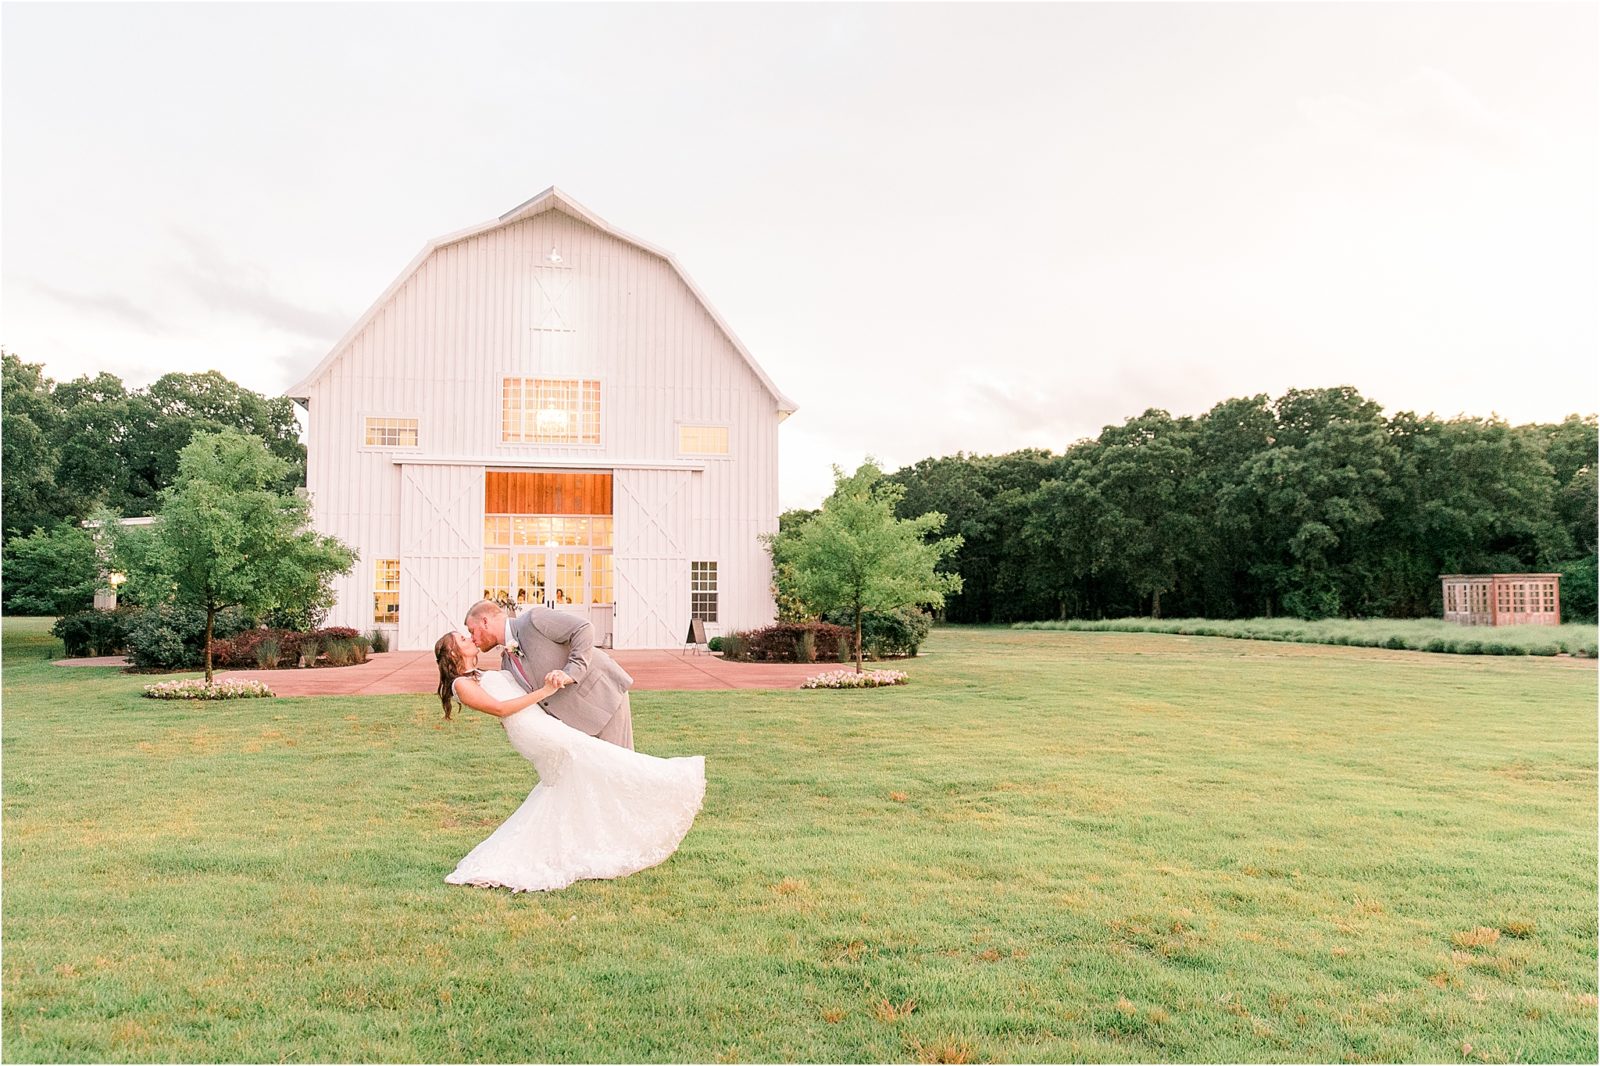 Wedding Reception at White Sparrow Barn in Dallas, TX by wedding photographer Jillian Hogan 